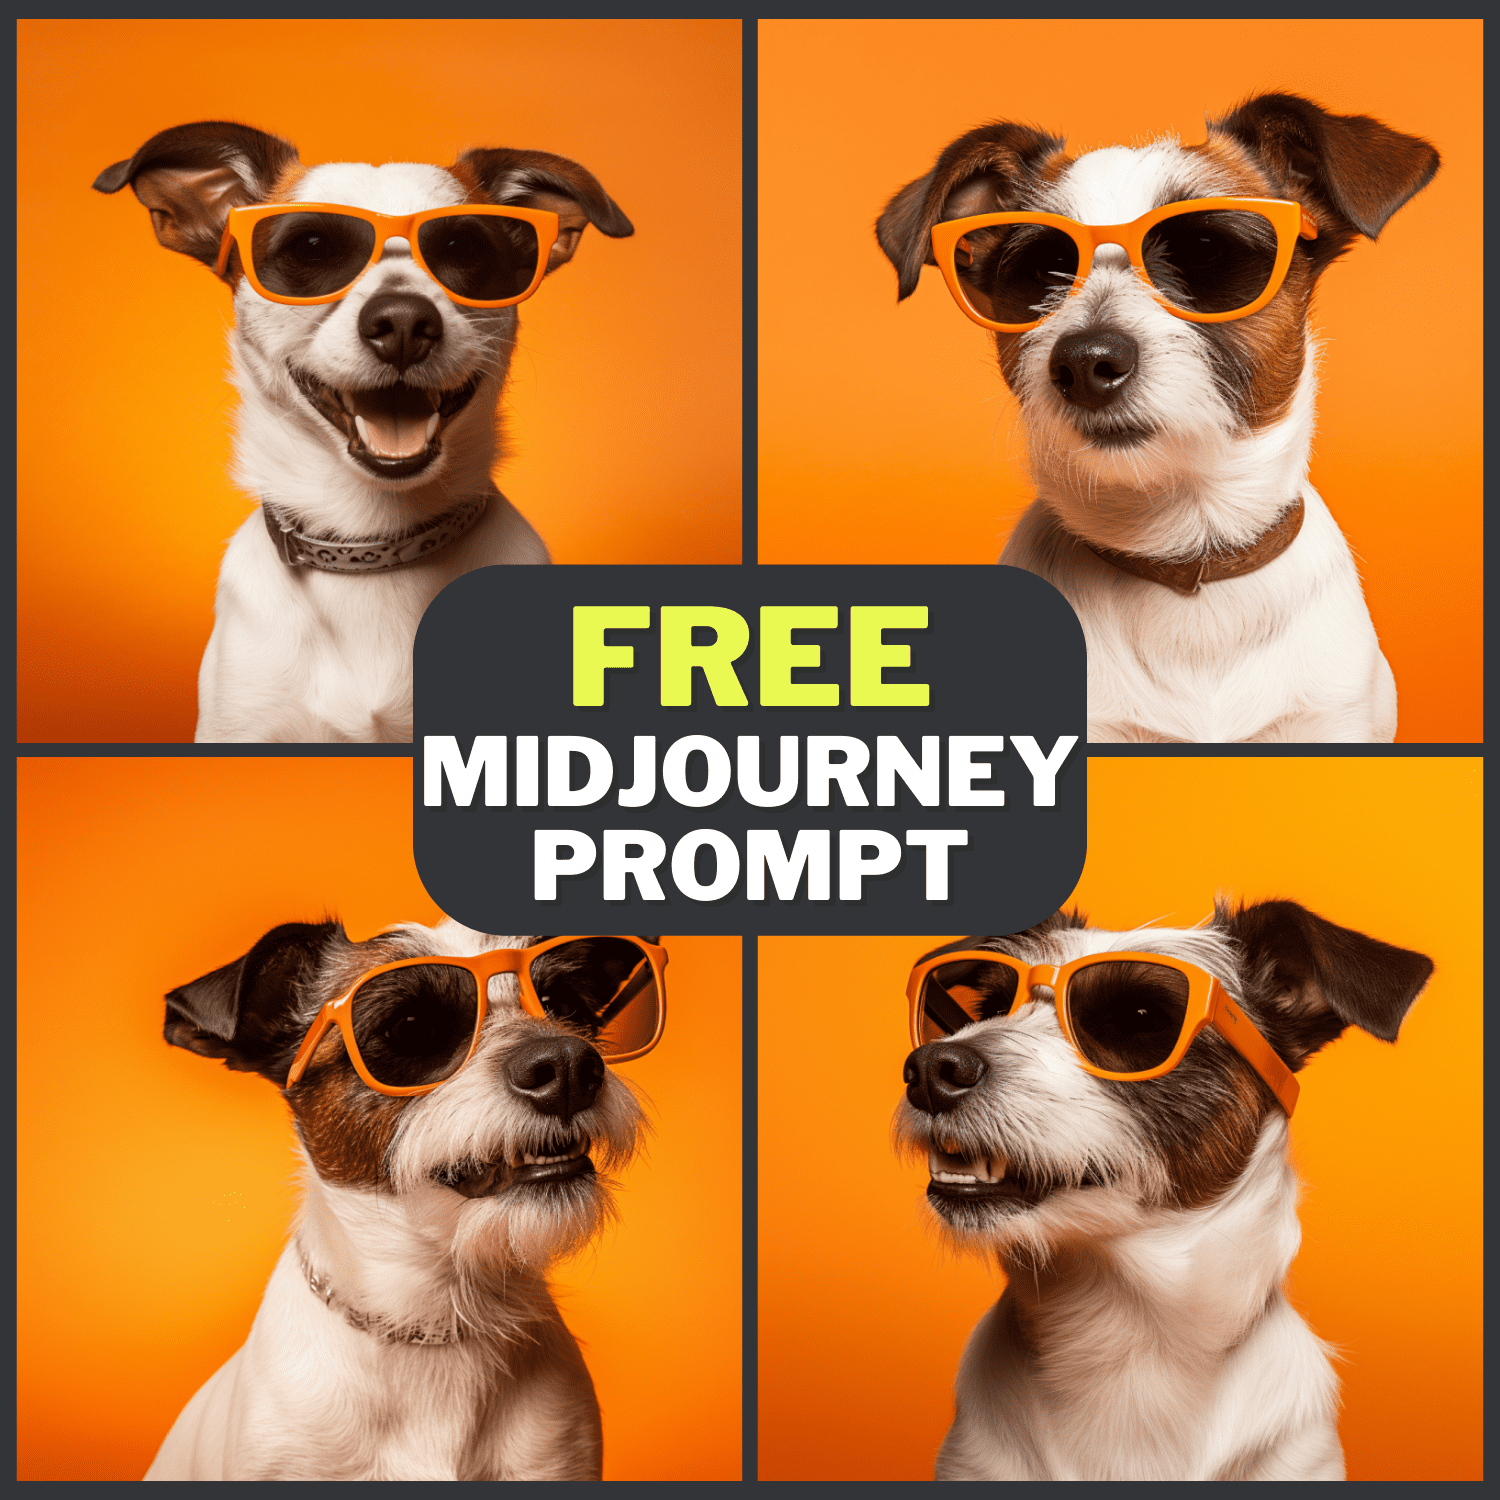 Dog Portrait With Sunglasses Free Midjourney Prompt 1